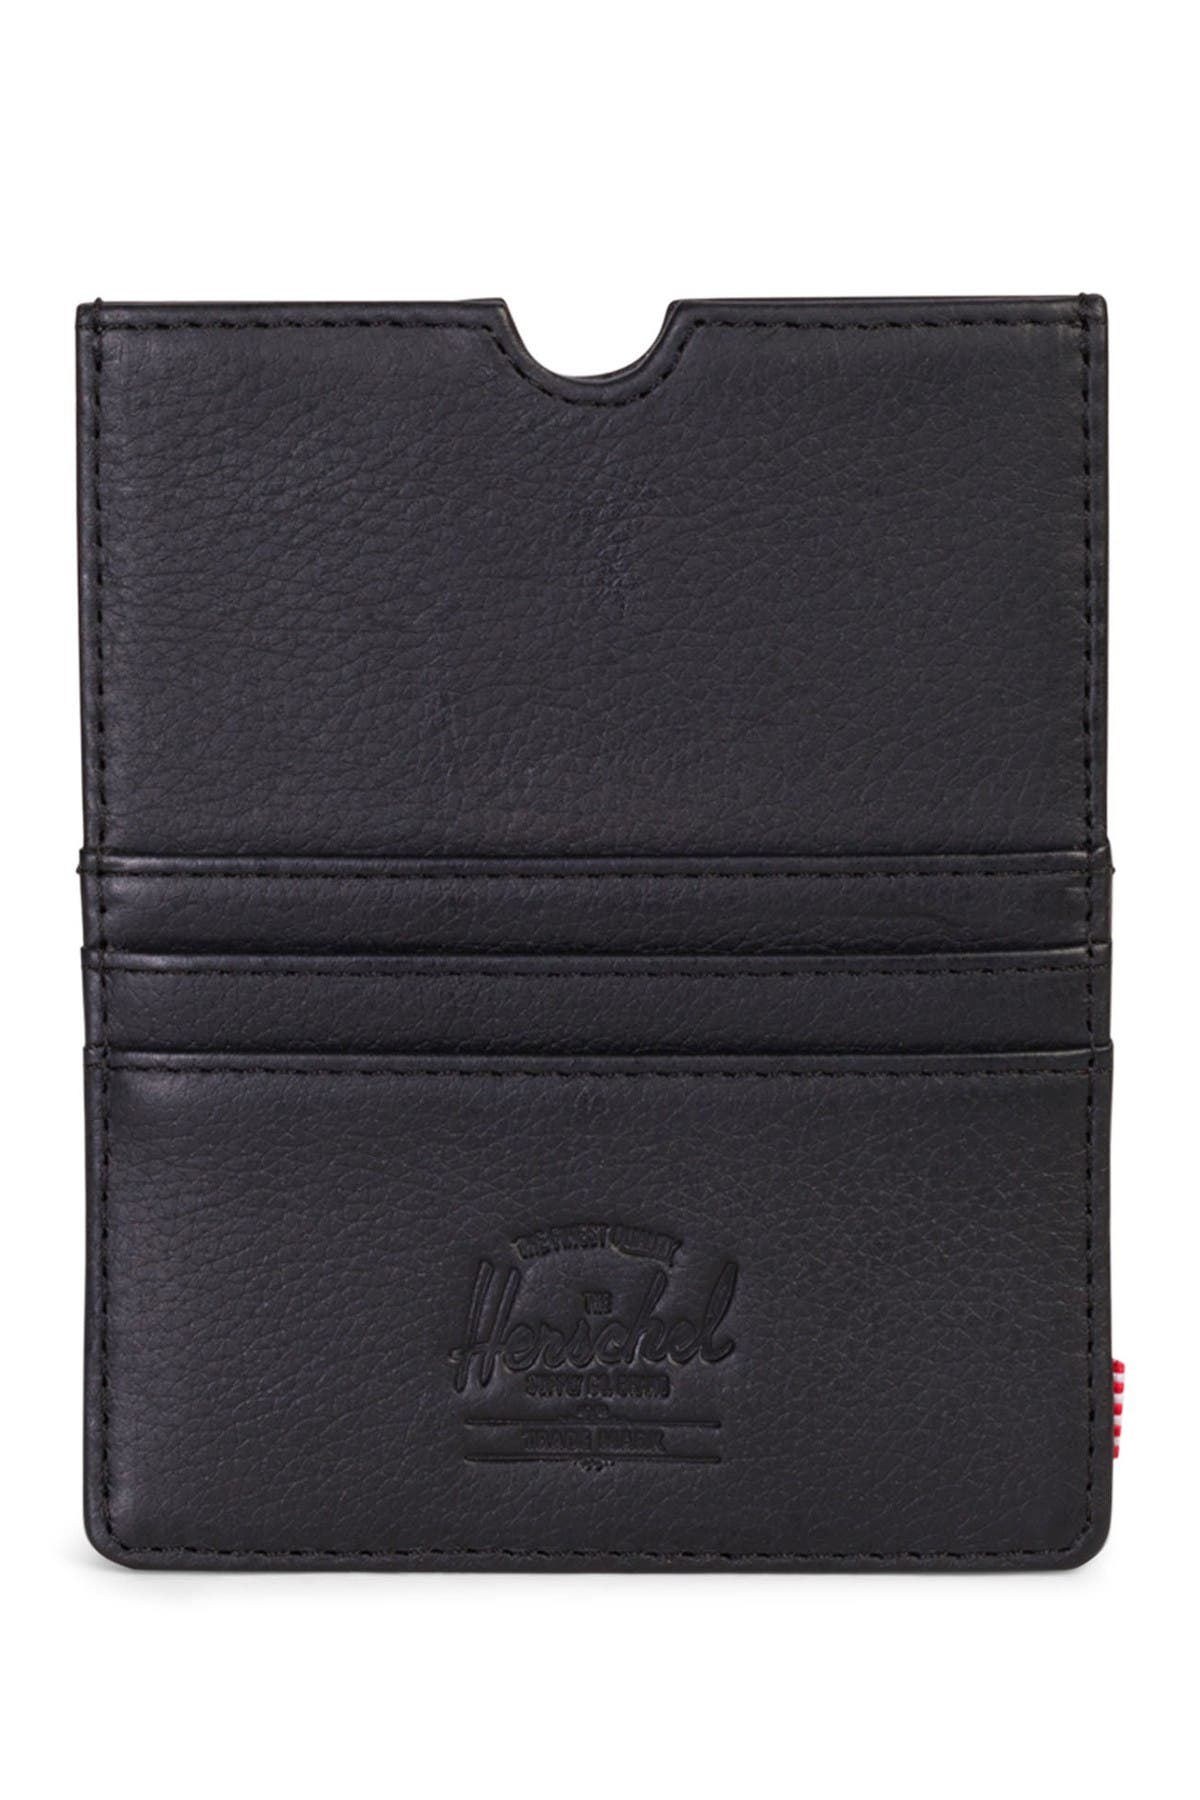 Herschel Supply Co Eugene Pebbled Leather Passport Holder In Black